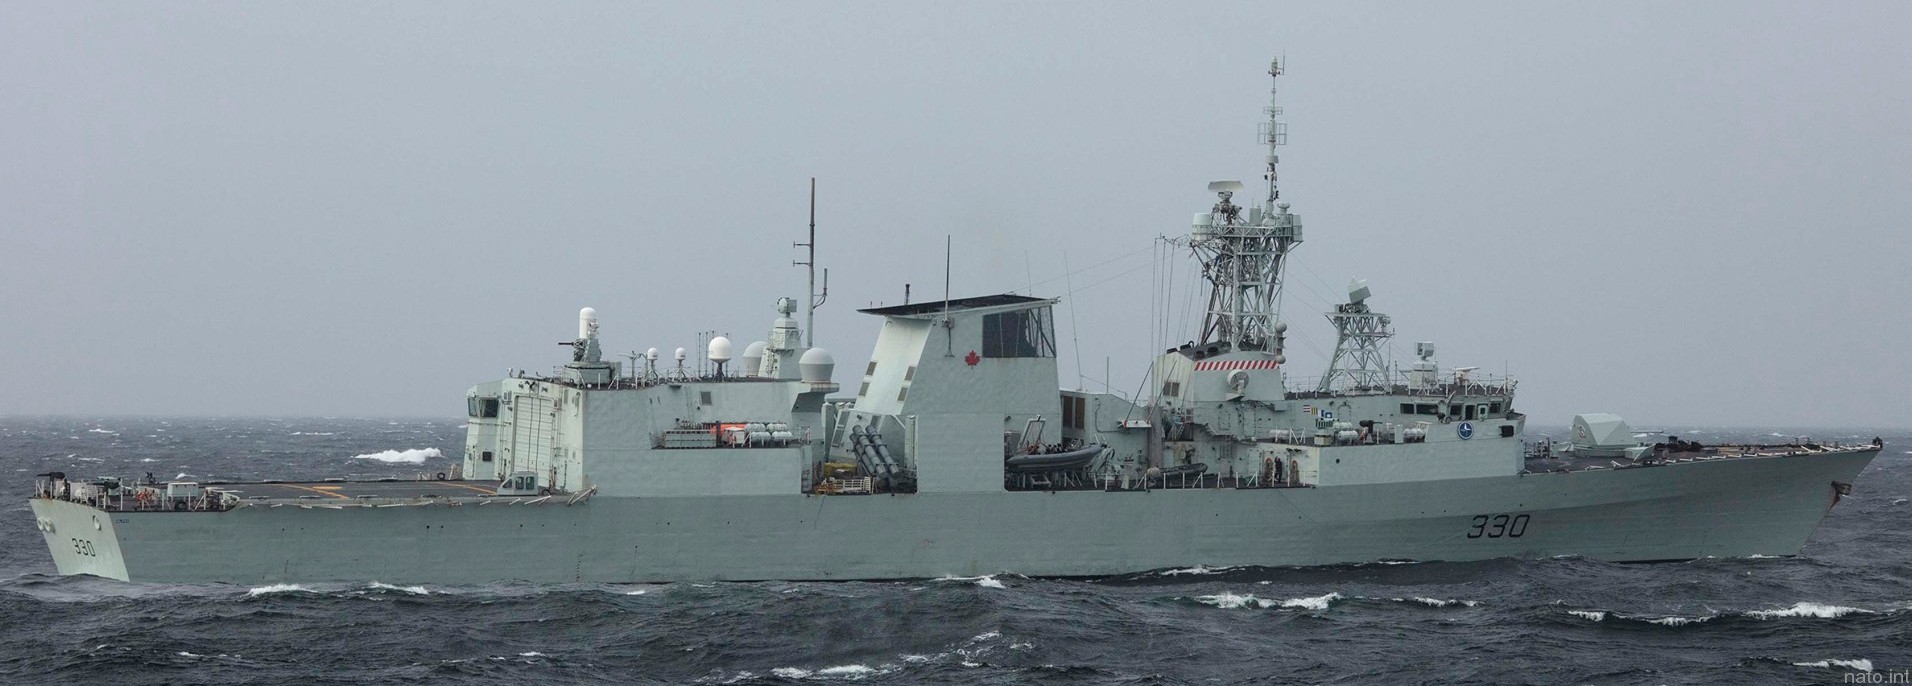 ffh-330 hmcs halifax class helicopter patrol frigate royal canadian navy rcn ncsm marine royale canadienne 09